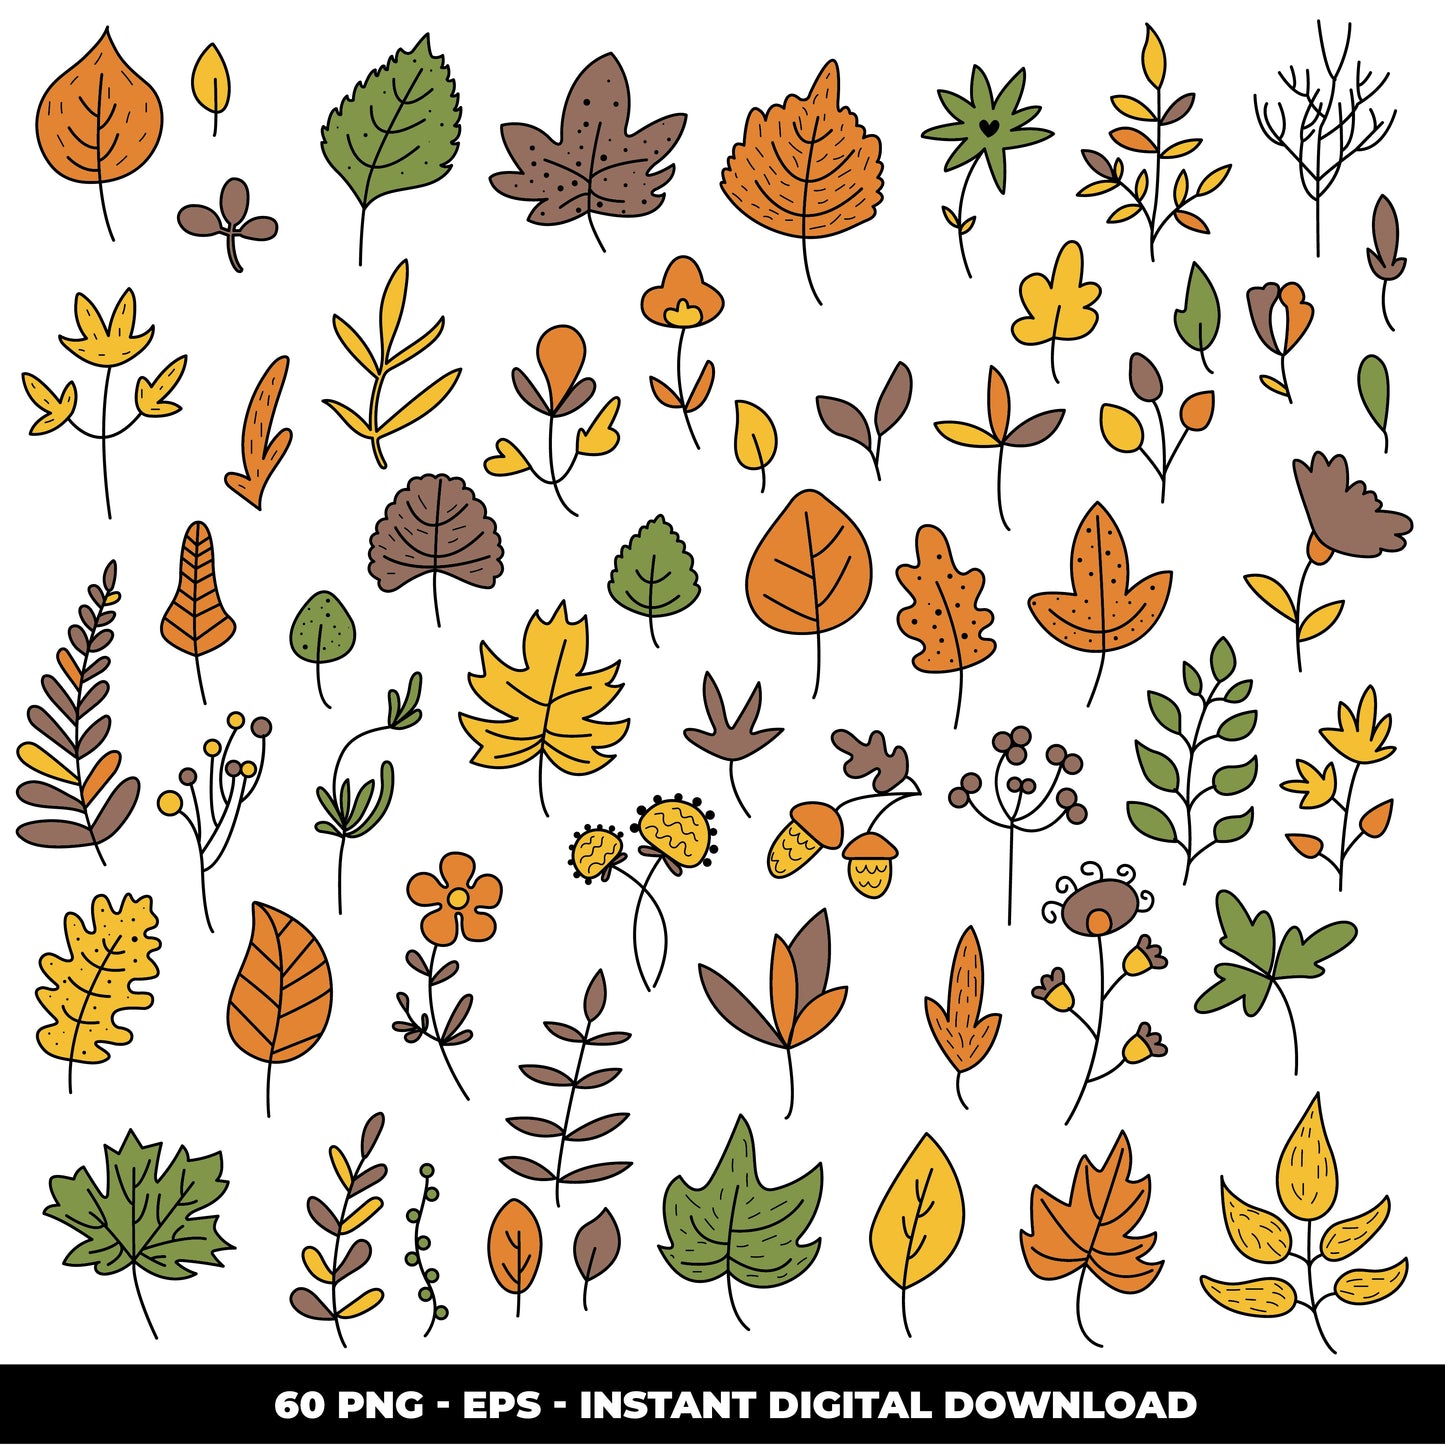 COD827 - Leaves clipart, Plant eps, Paper Leaves, Leaf Templates, Wreath, Cut Files, Leaf Clipart